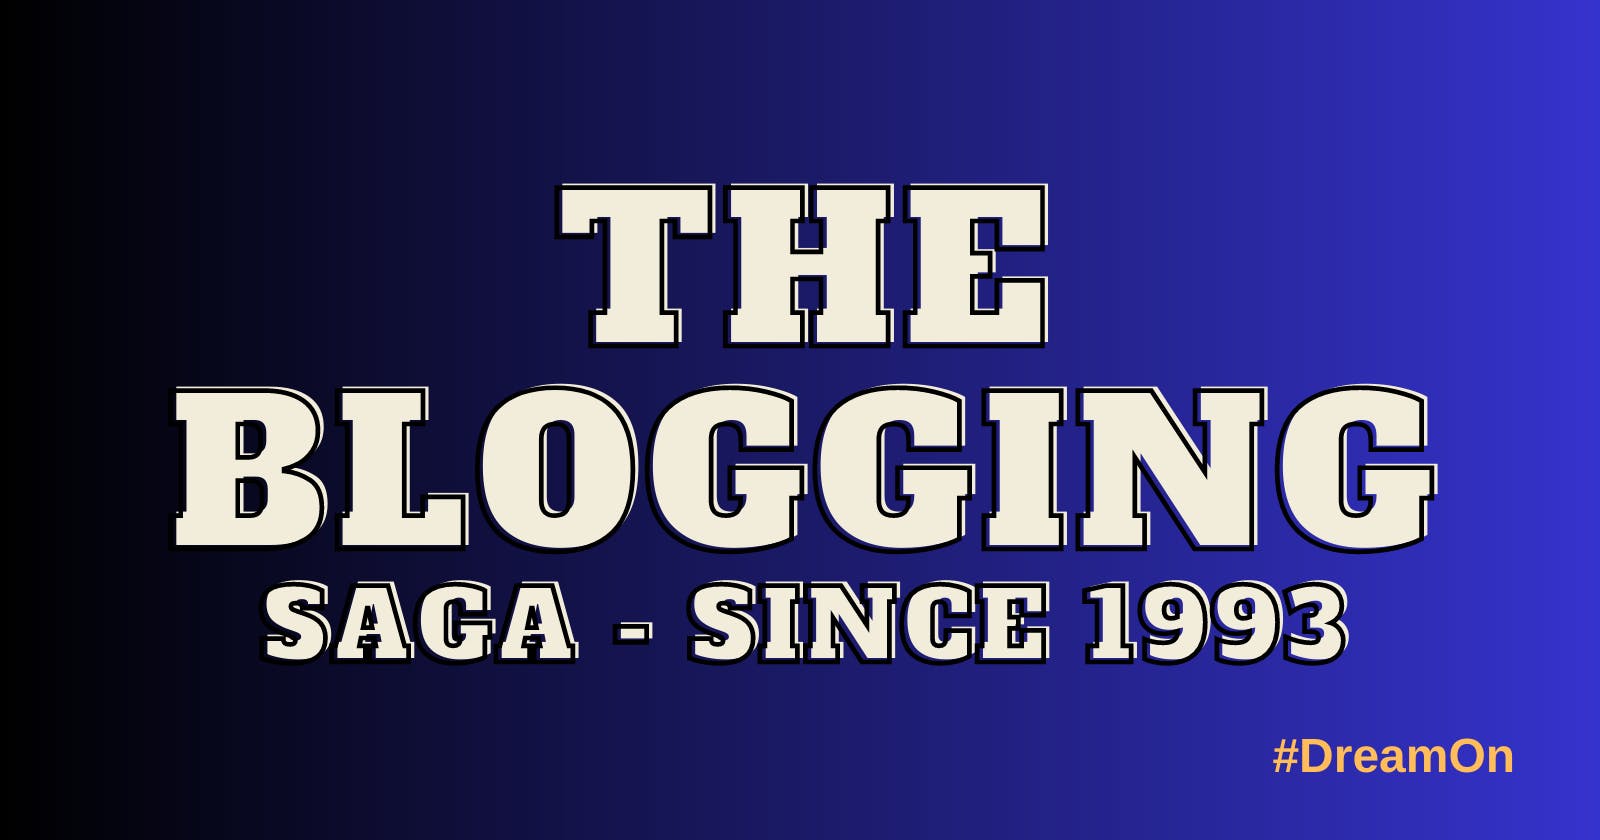 The Blogging Saga - SINCE 1993